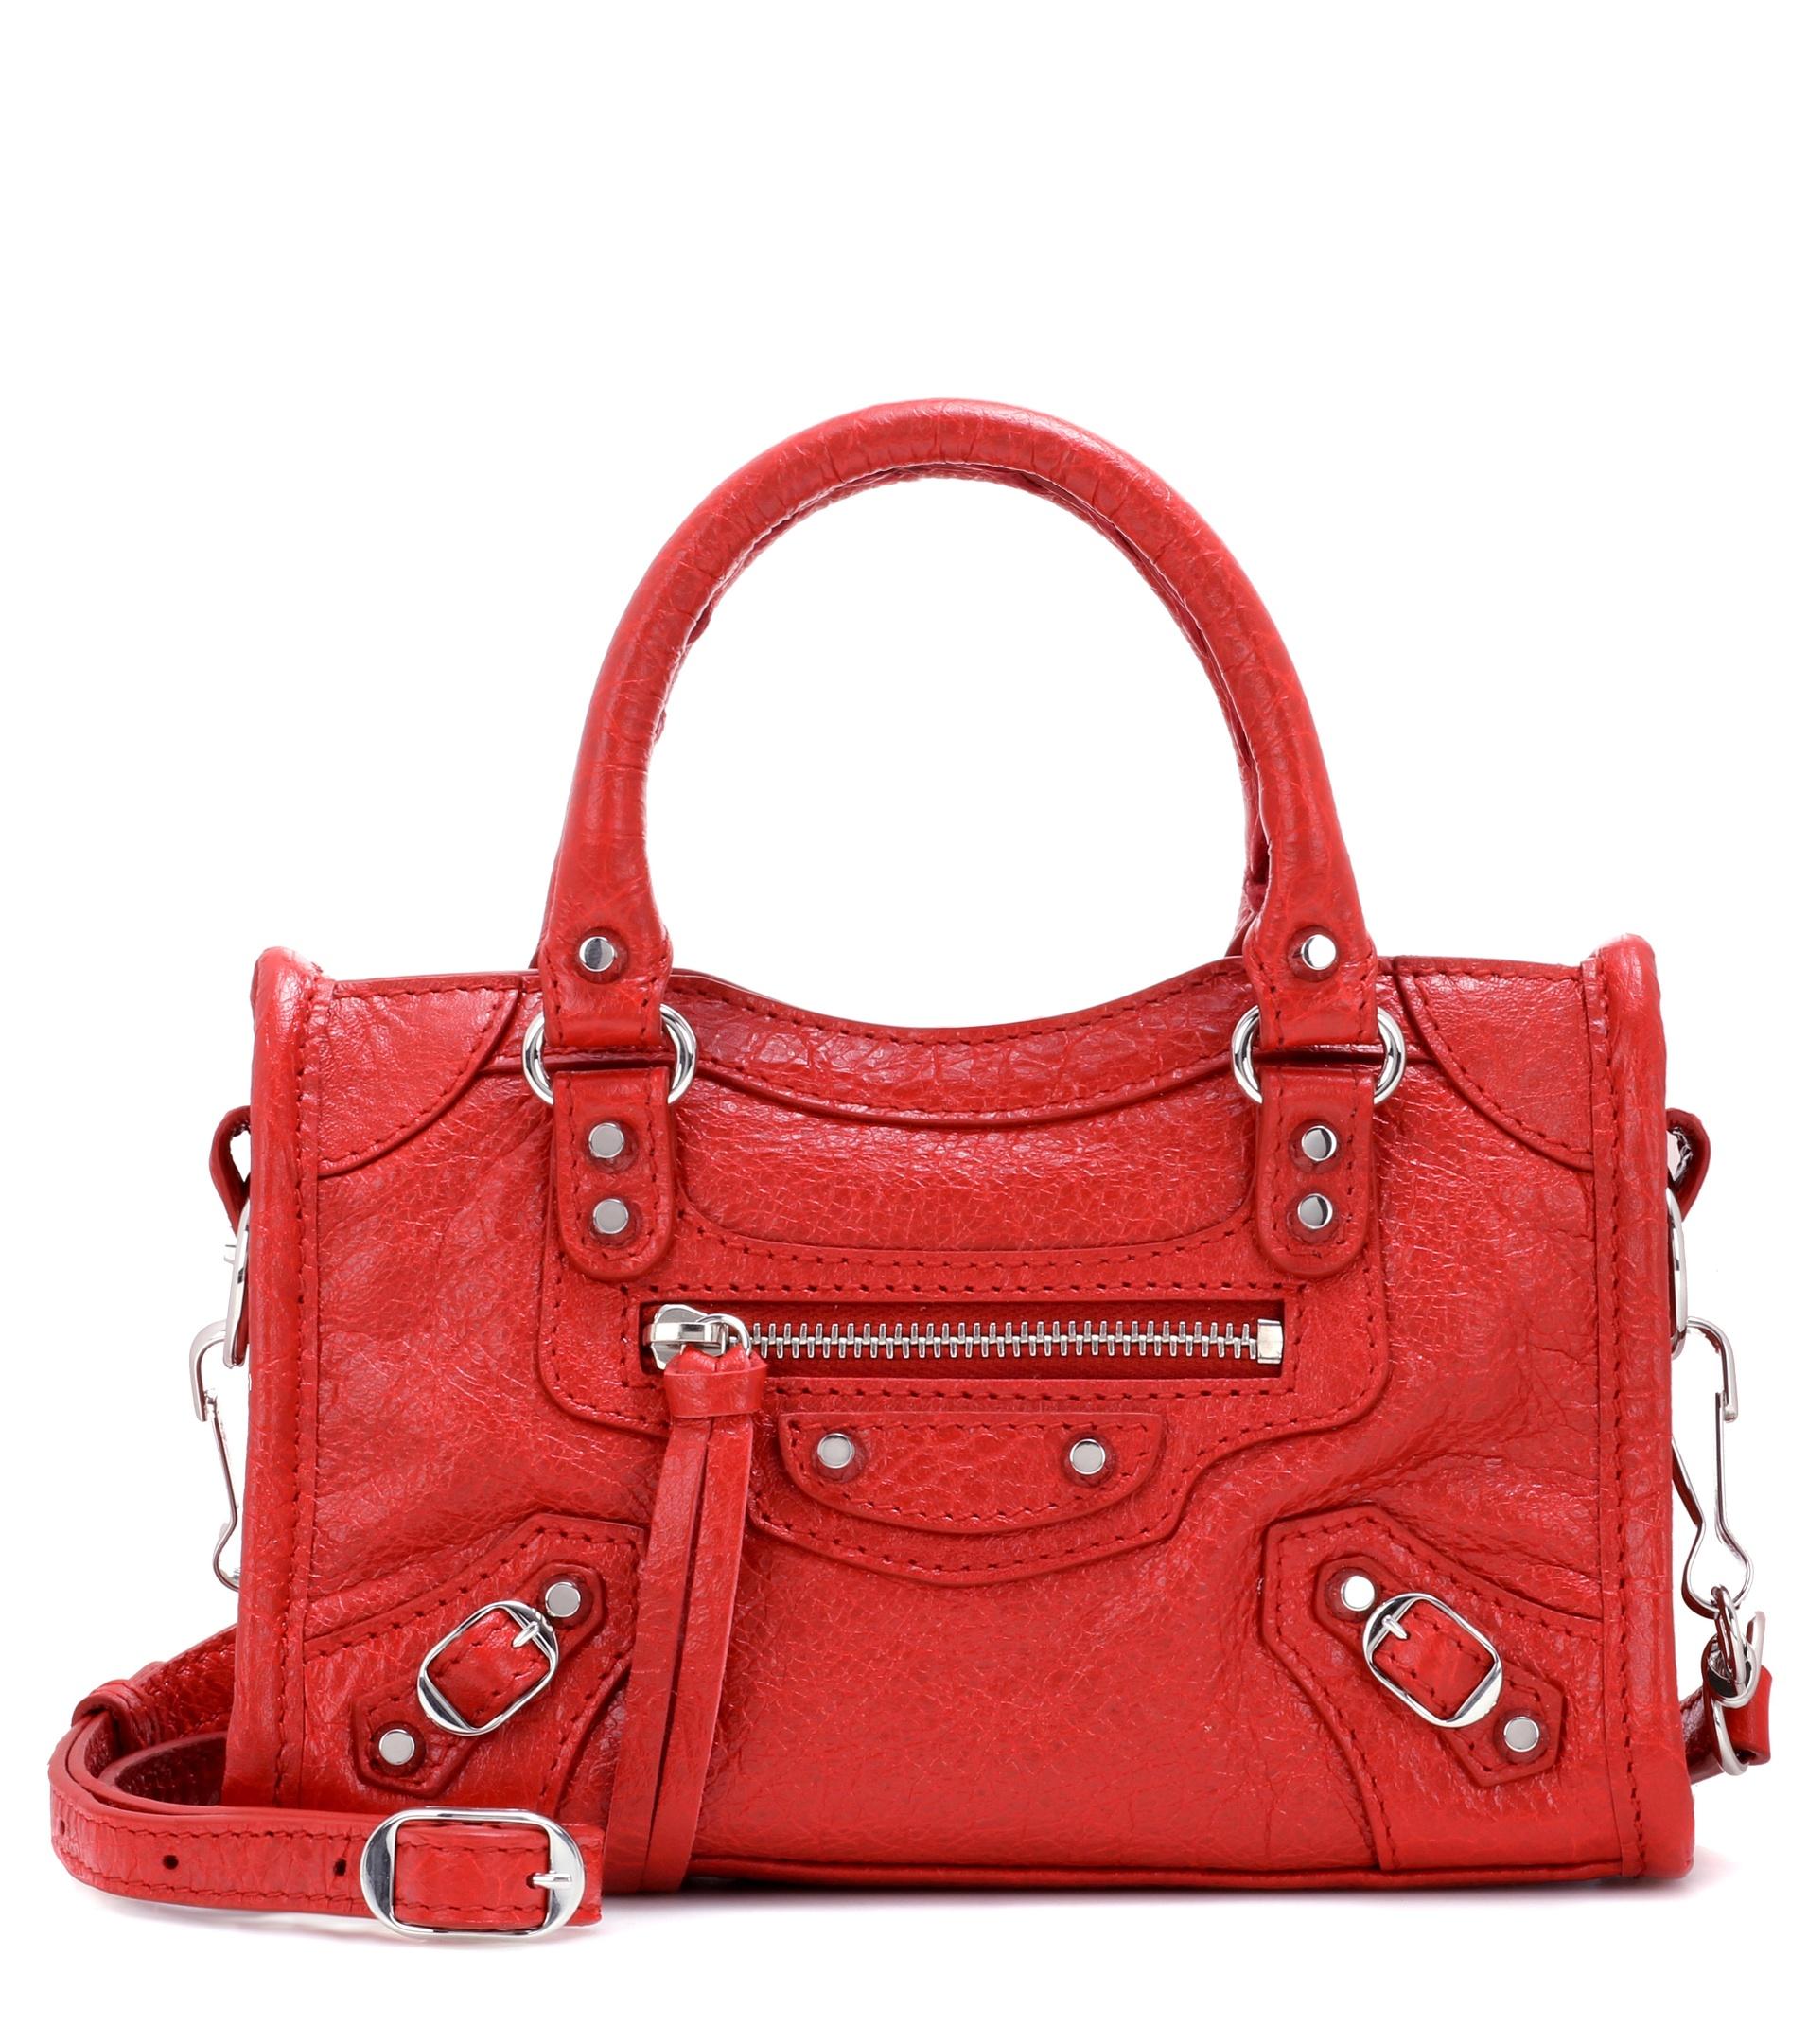 Balenciaga Classic Nano City Shoulder Bag in Red - Lyst